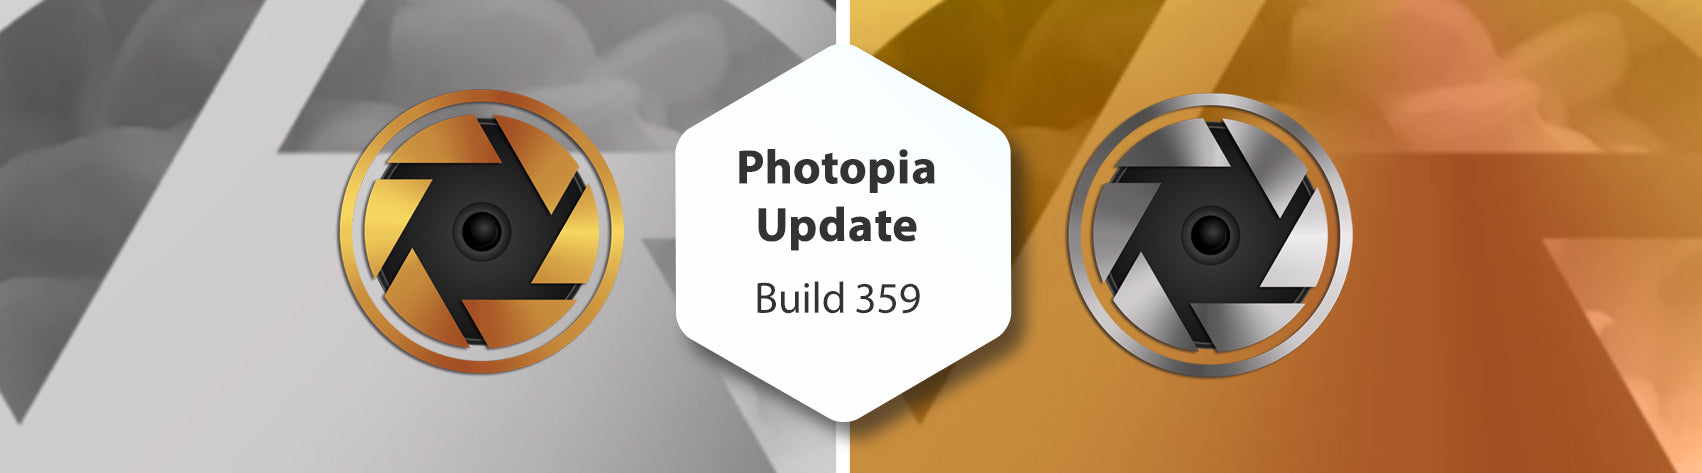 Photopia Update - Build 359